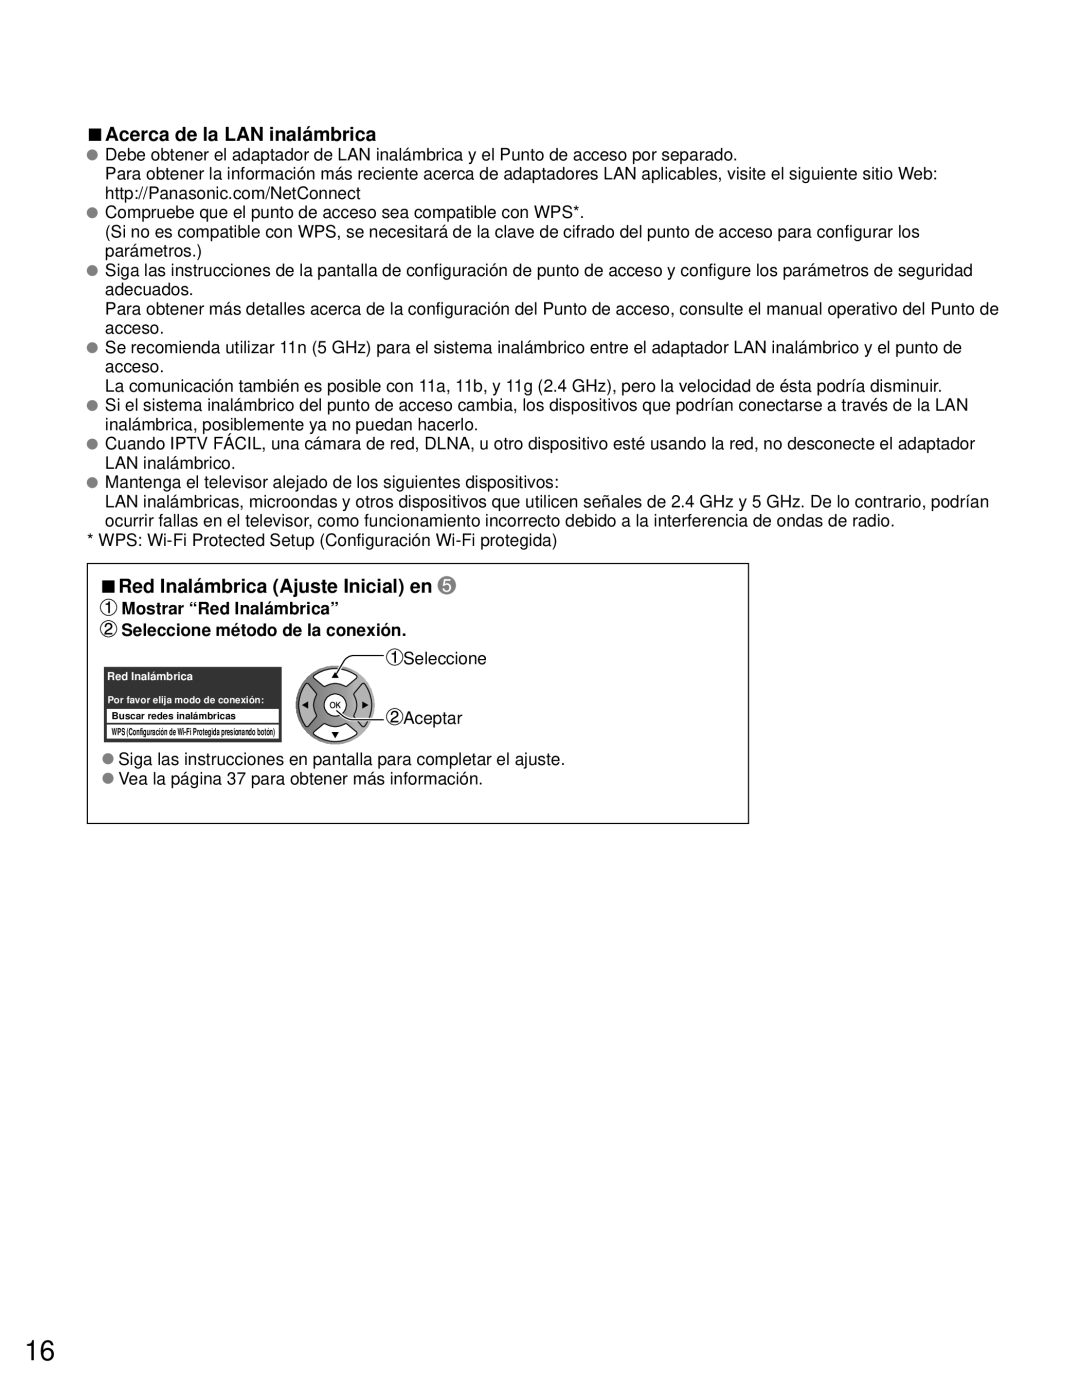 Panasonic TC-L42E3 owner manual Acerca de la LAN inalámbrica, Red Inalámbrica Ajuste Inicial en 